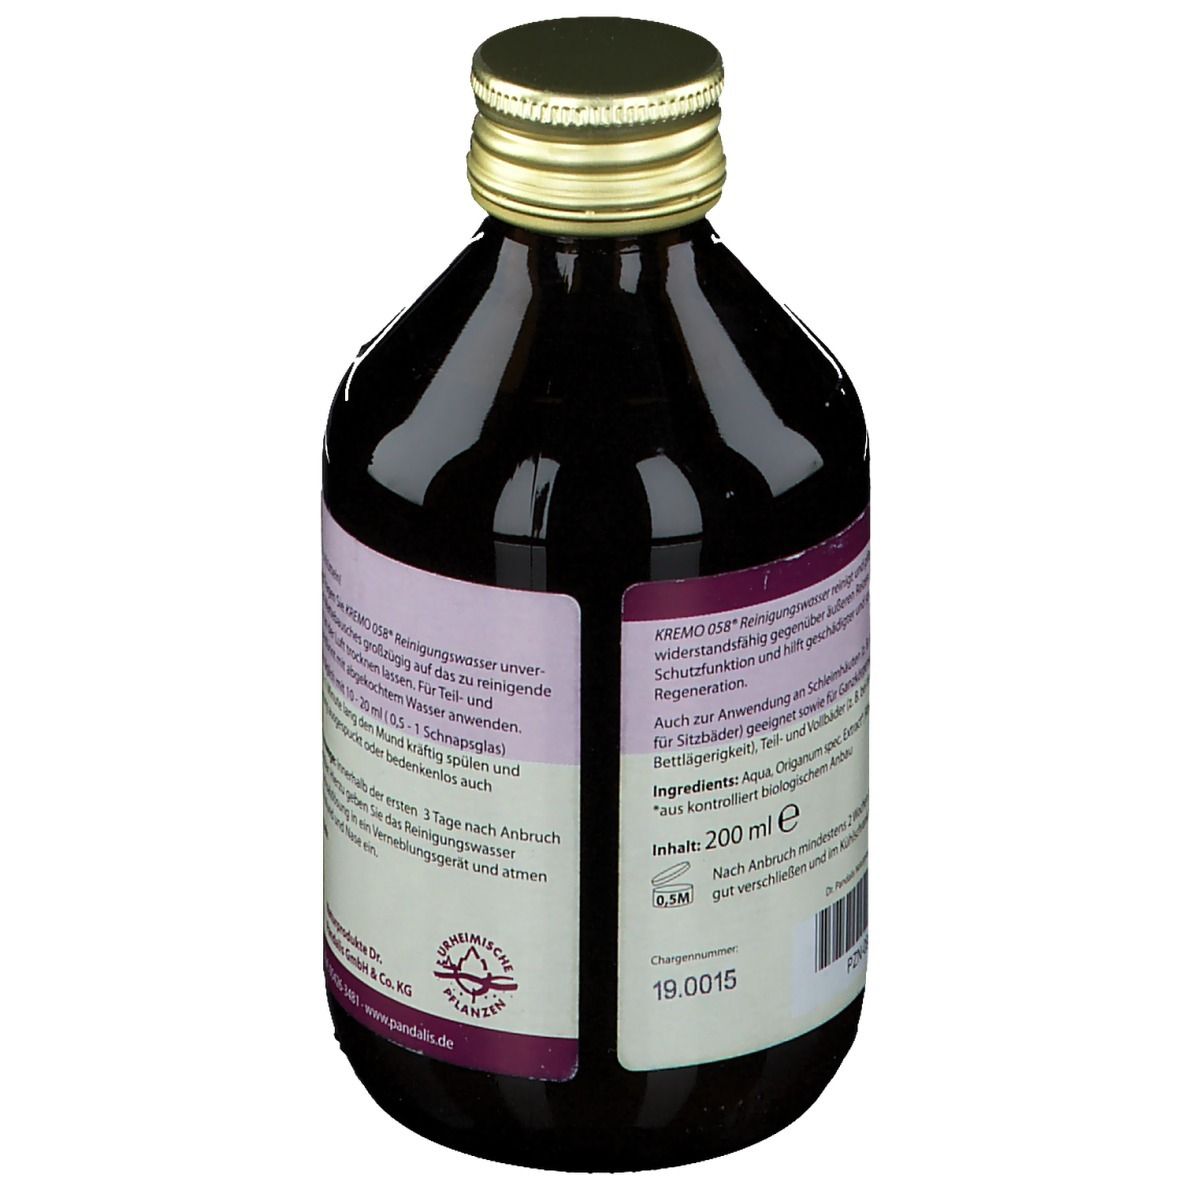 Dr. Pandalis Kremo 058® Bio-Reinigungswasser